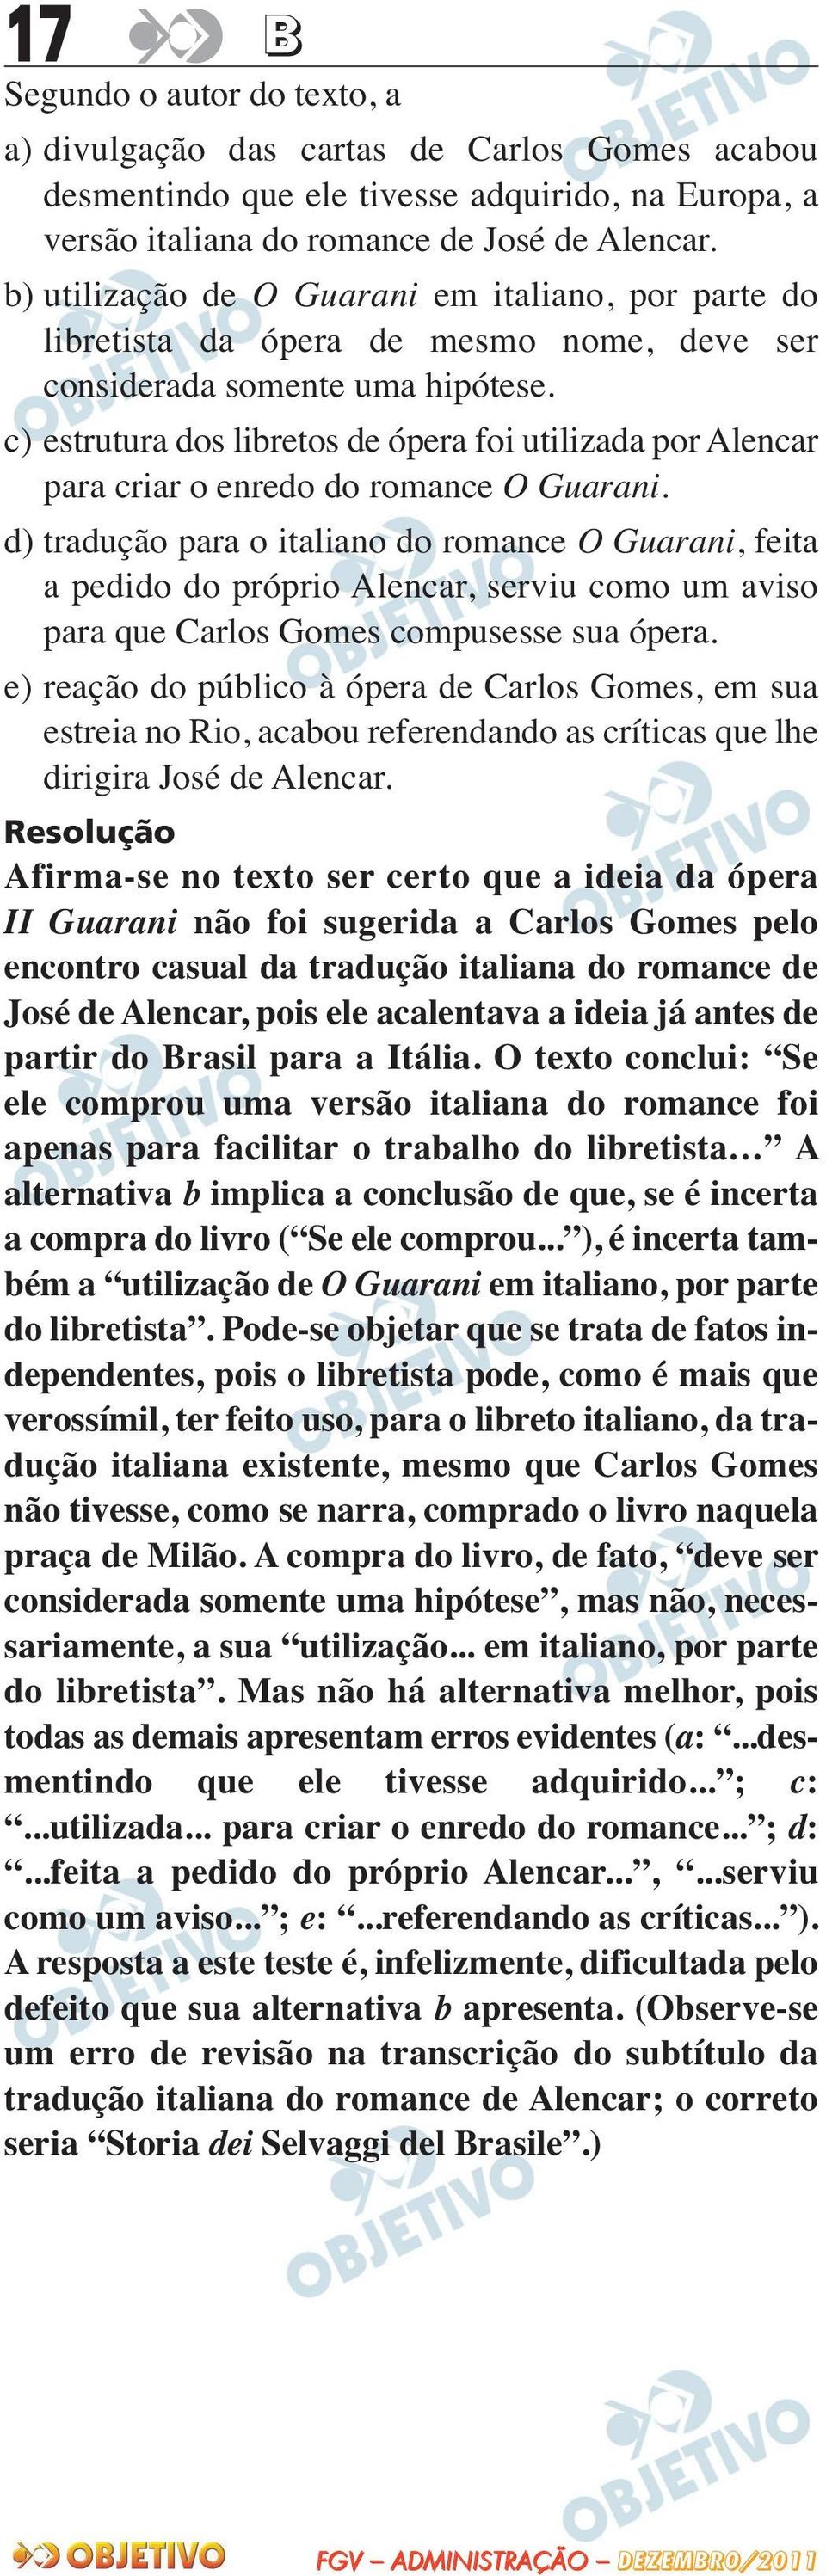 c) estrutura dos libretos de ópera foi utilizada por Alencar para criar o enredo do romance O Guarani.